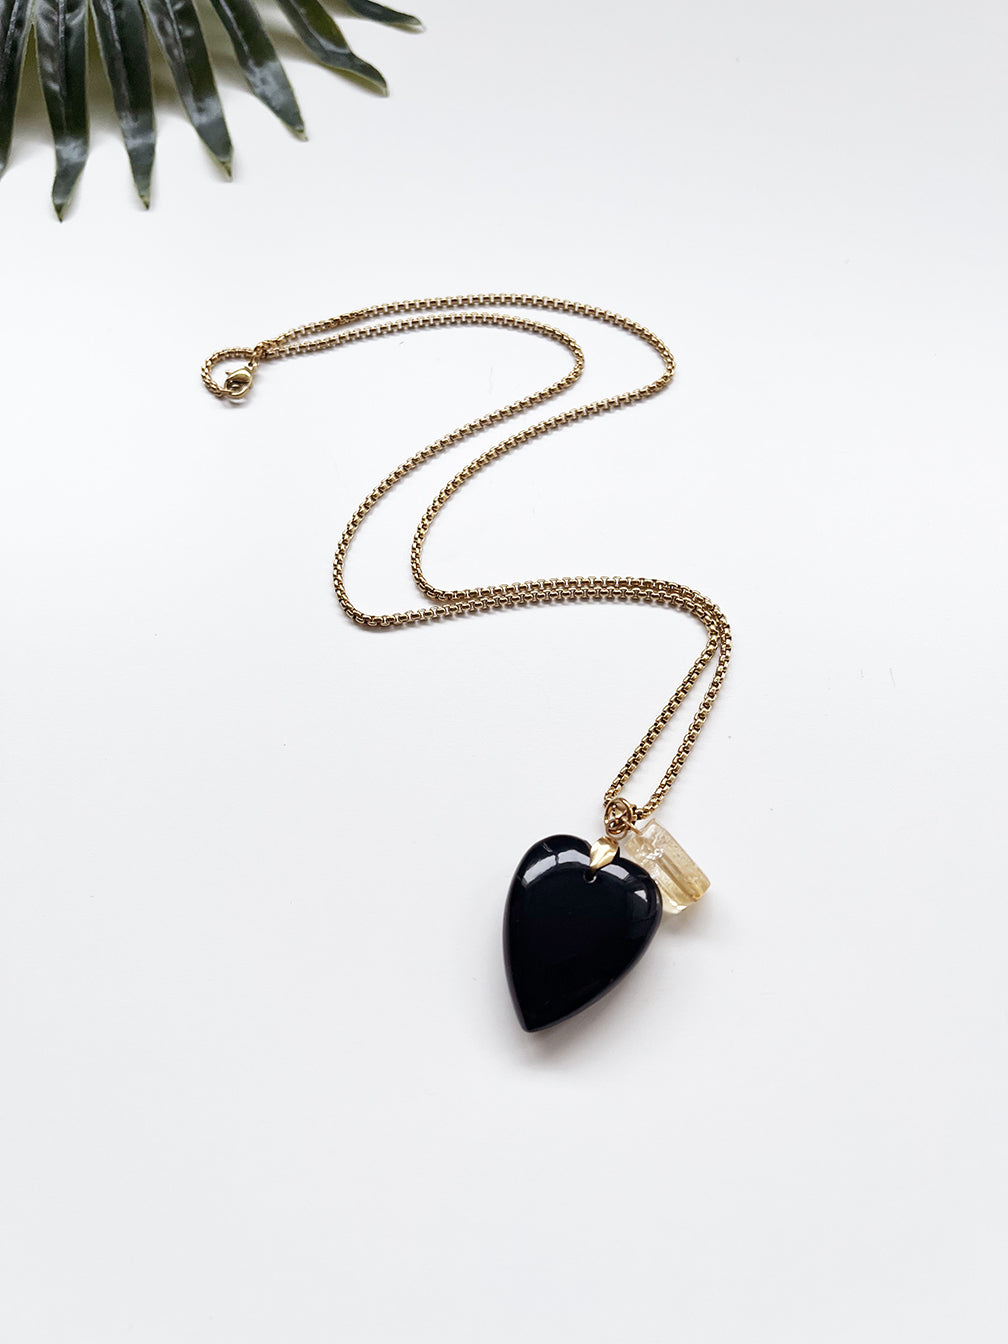 touchstone necklace - black onyx and lemon jade